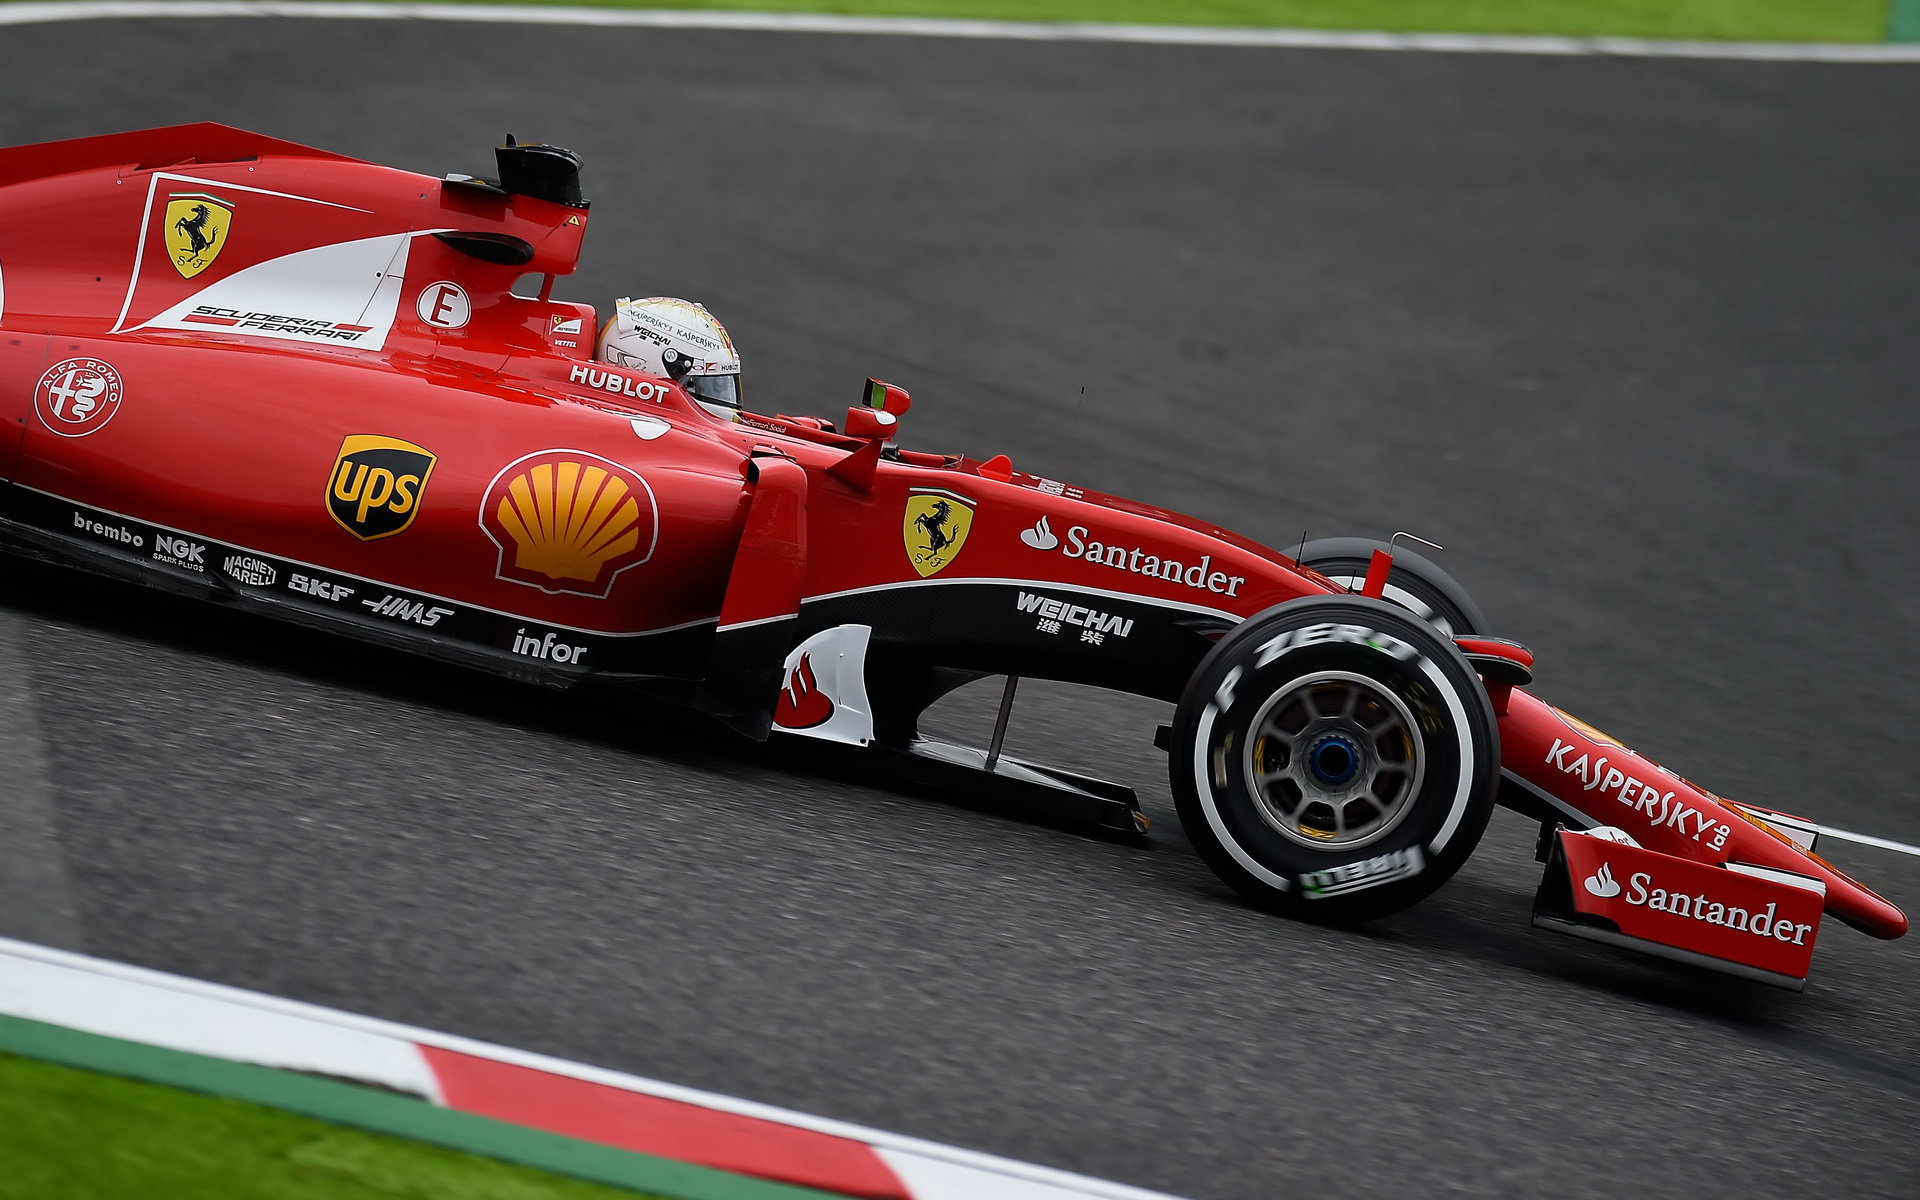 Sebastian Vettel, GP Japonska (Suzuka)